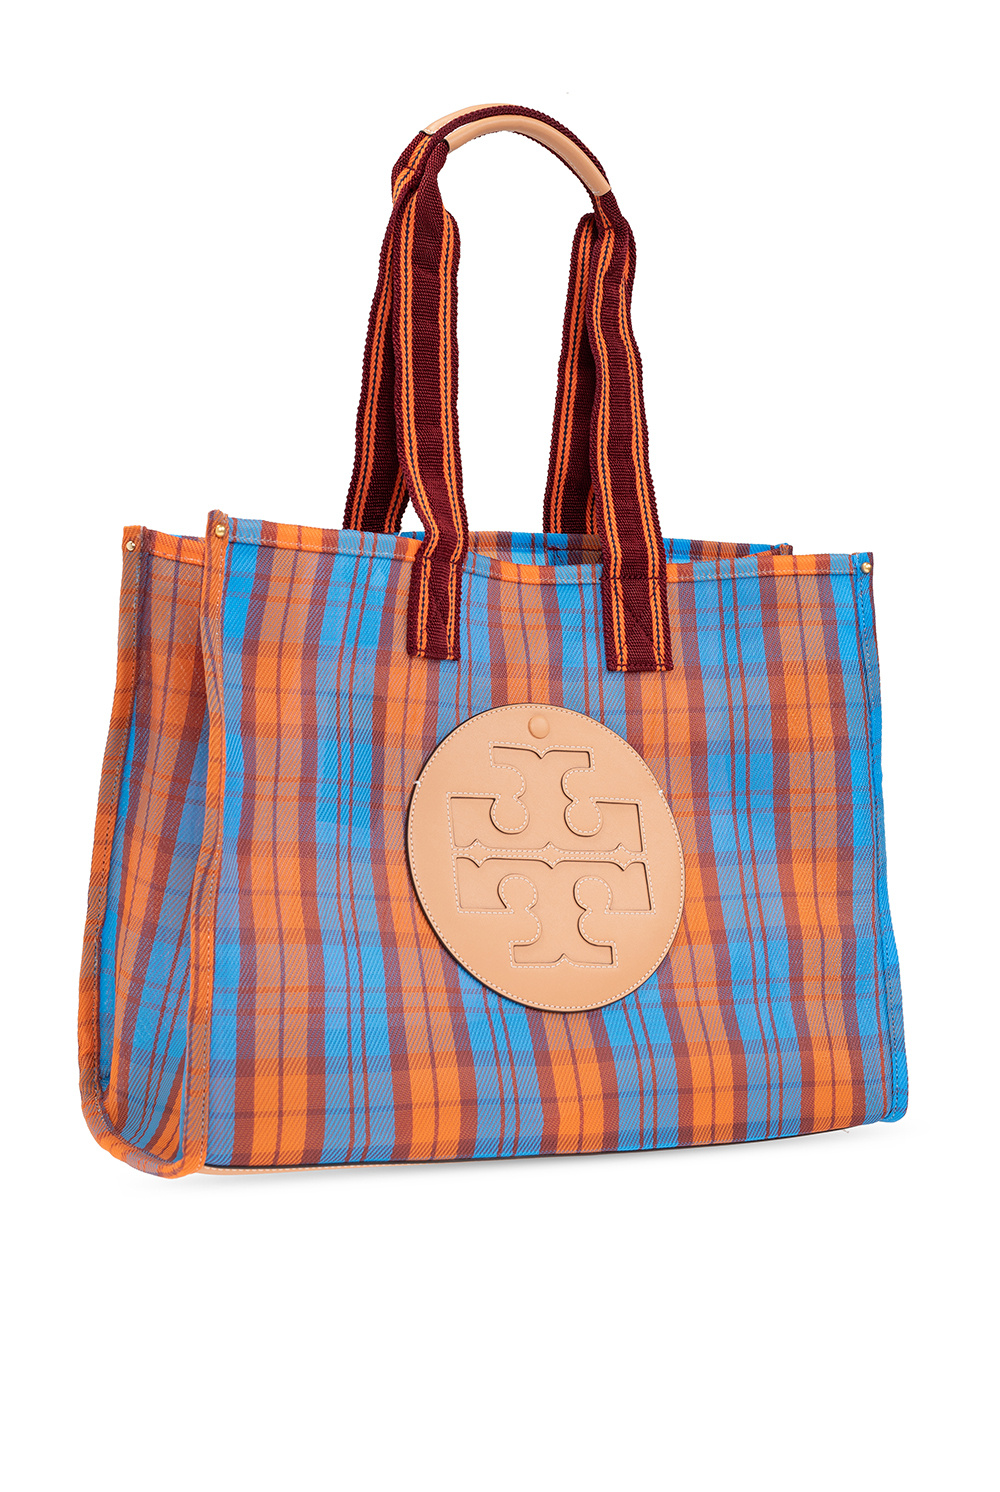 IetpShops Japan - Soft Leather Tote Bag - Blue 'Ella Mesh Market' shopper bag  Tory Burch